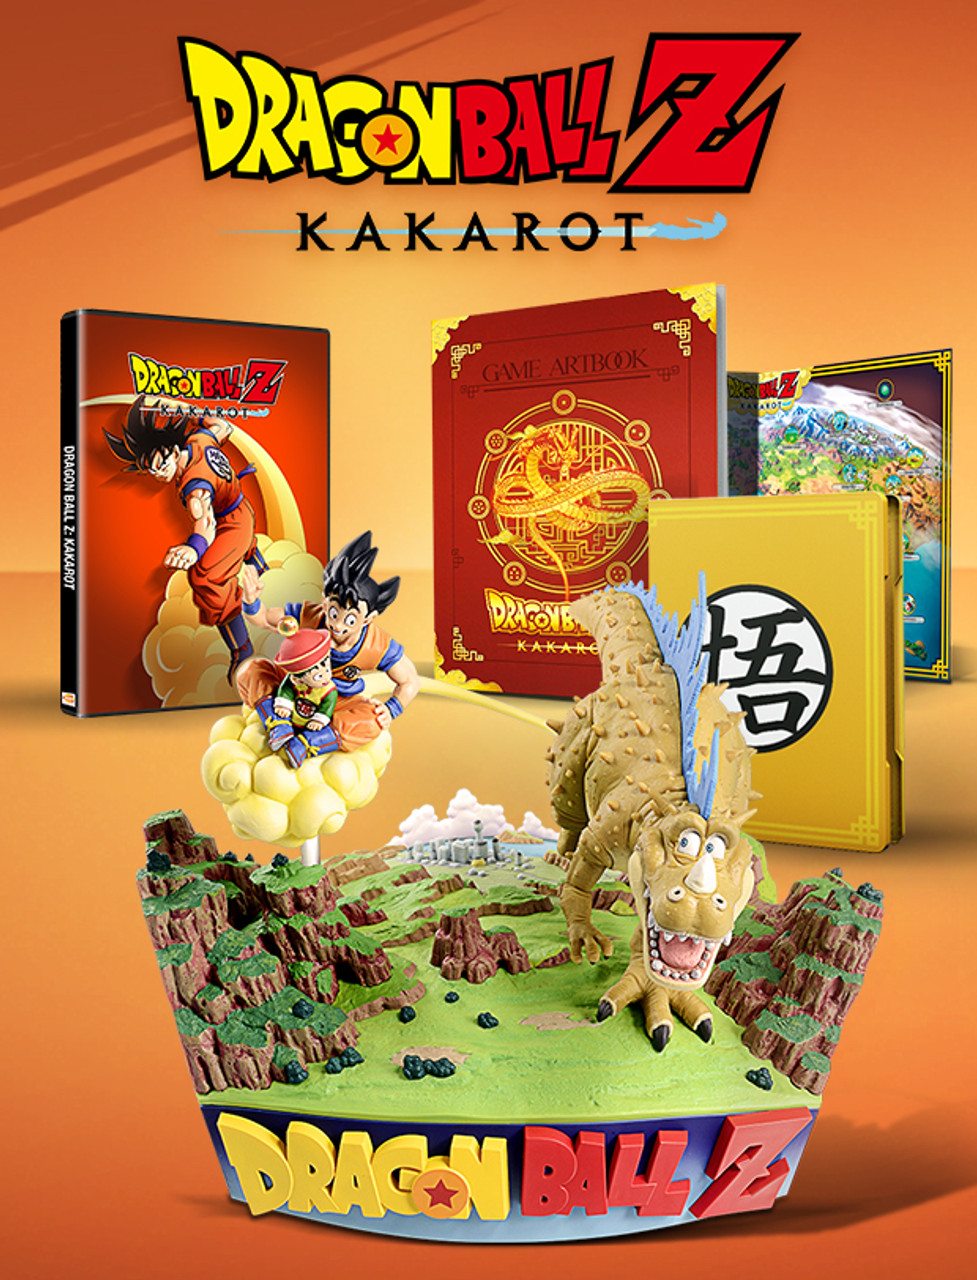 DRAGON BALL Z: Kakarot Collector's Edition - PlayStation 4